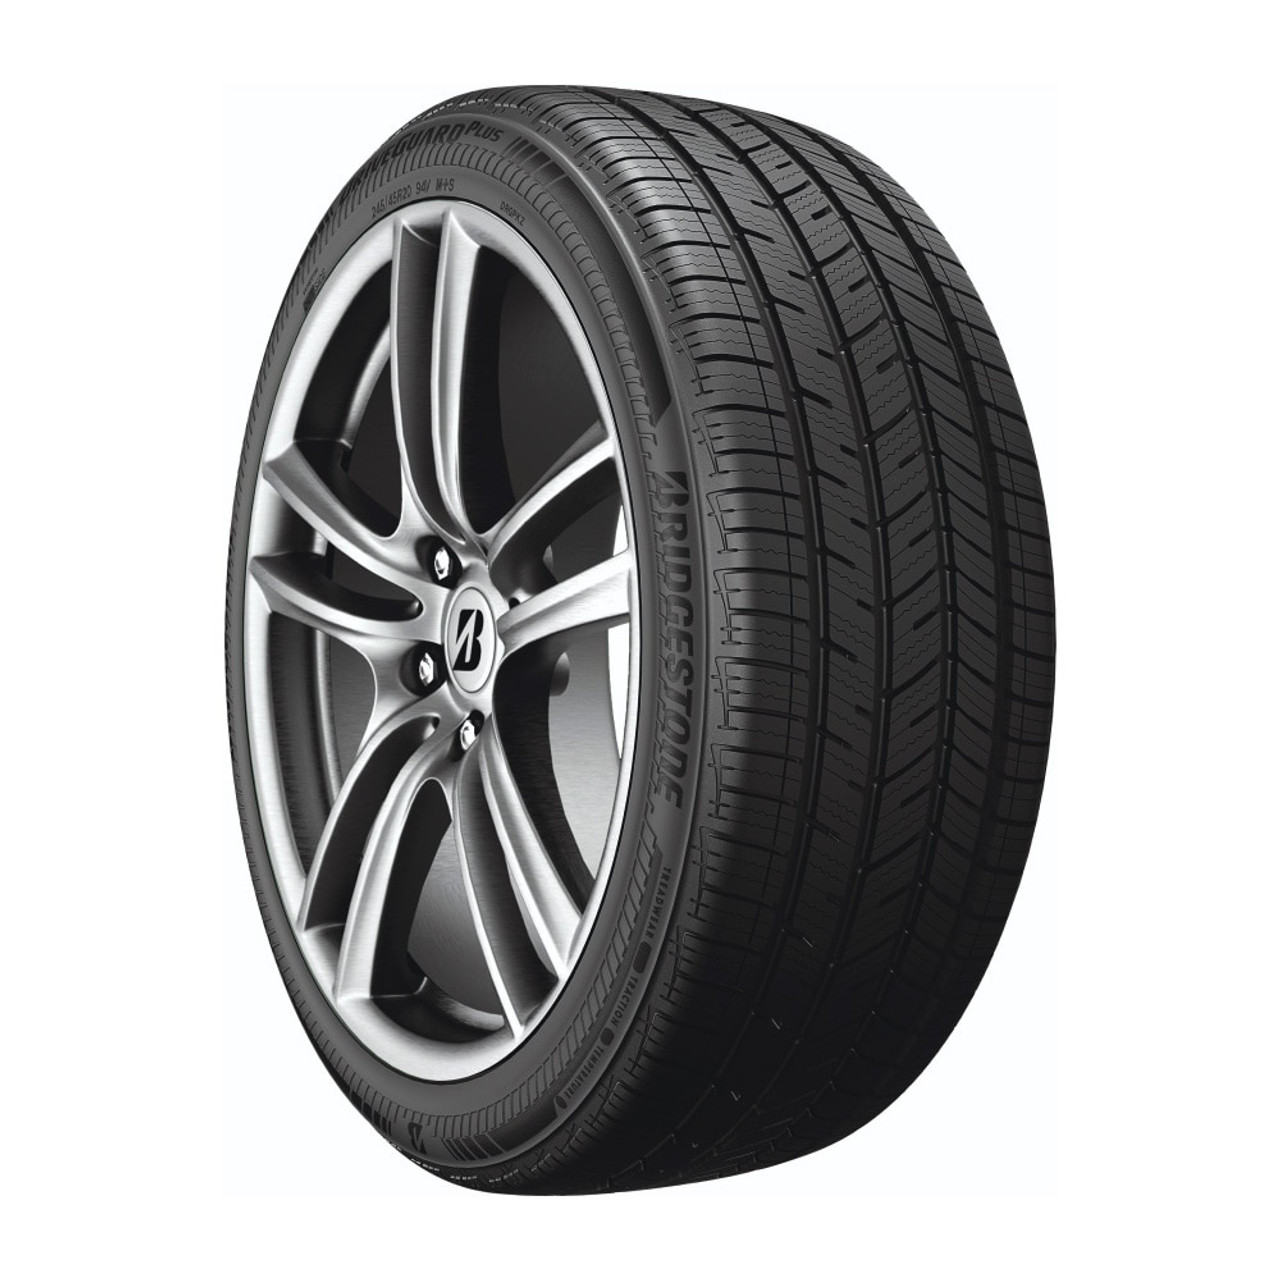 Bridgestone DriveGuard Plus Run Flat Tire 205/45R17 88W 640AA BW - 5% IN  CART DISCOUNT!